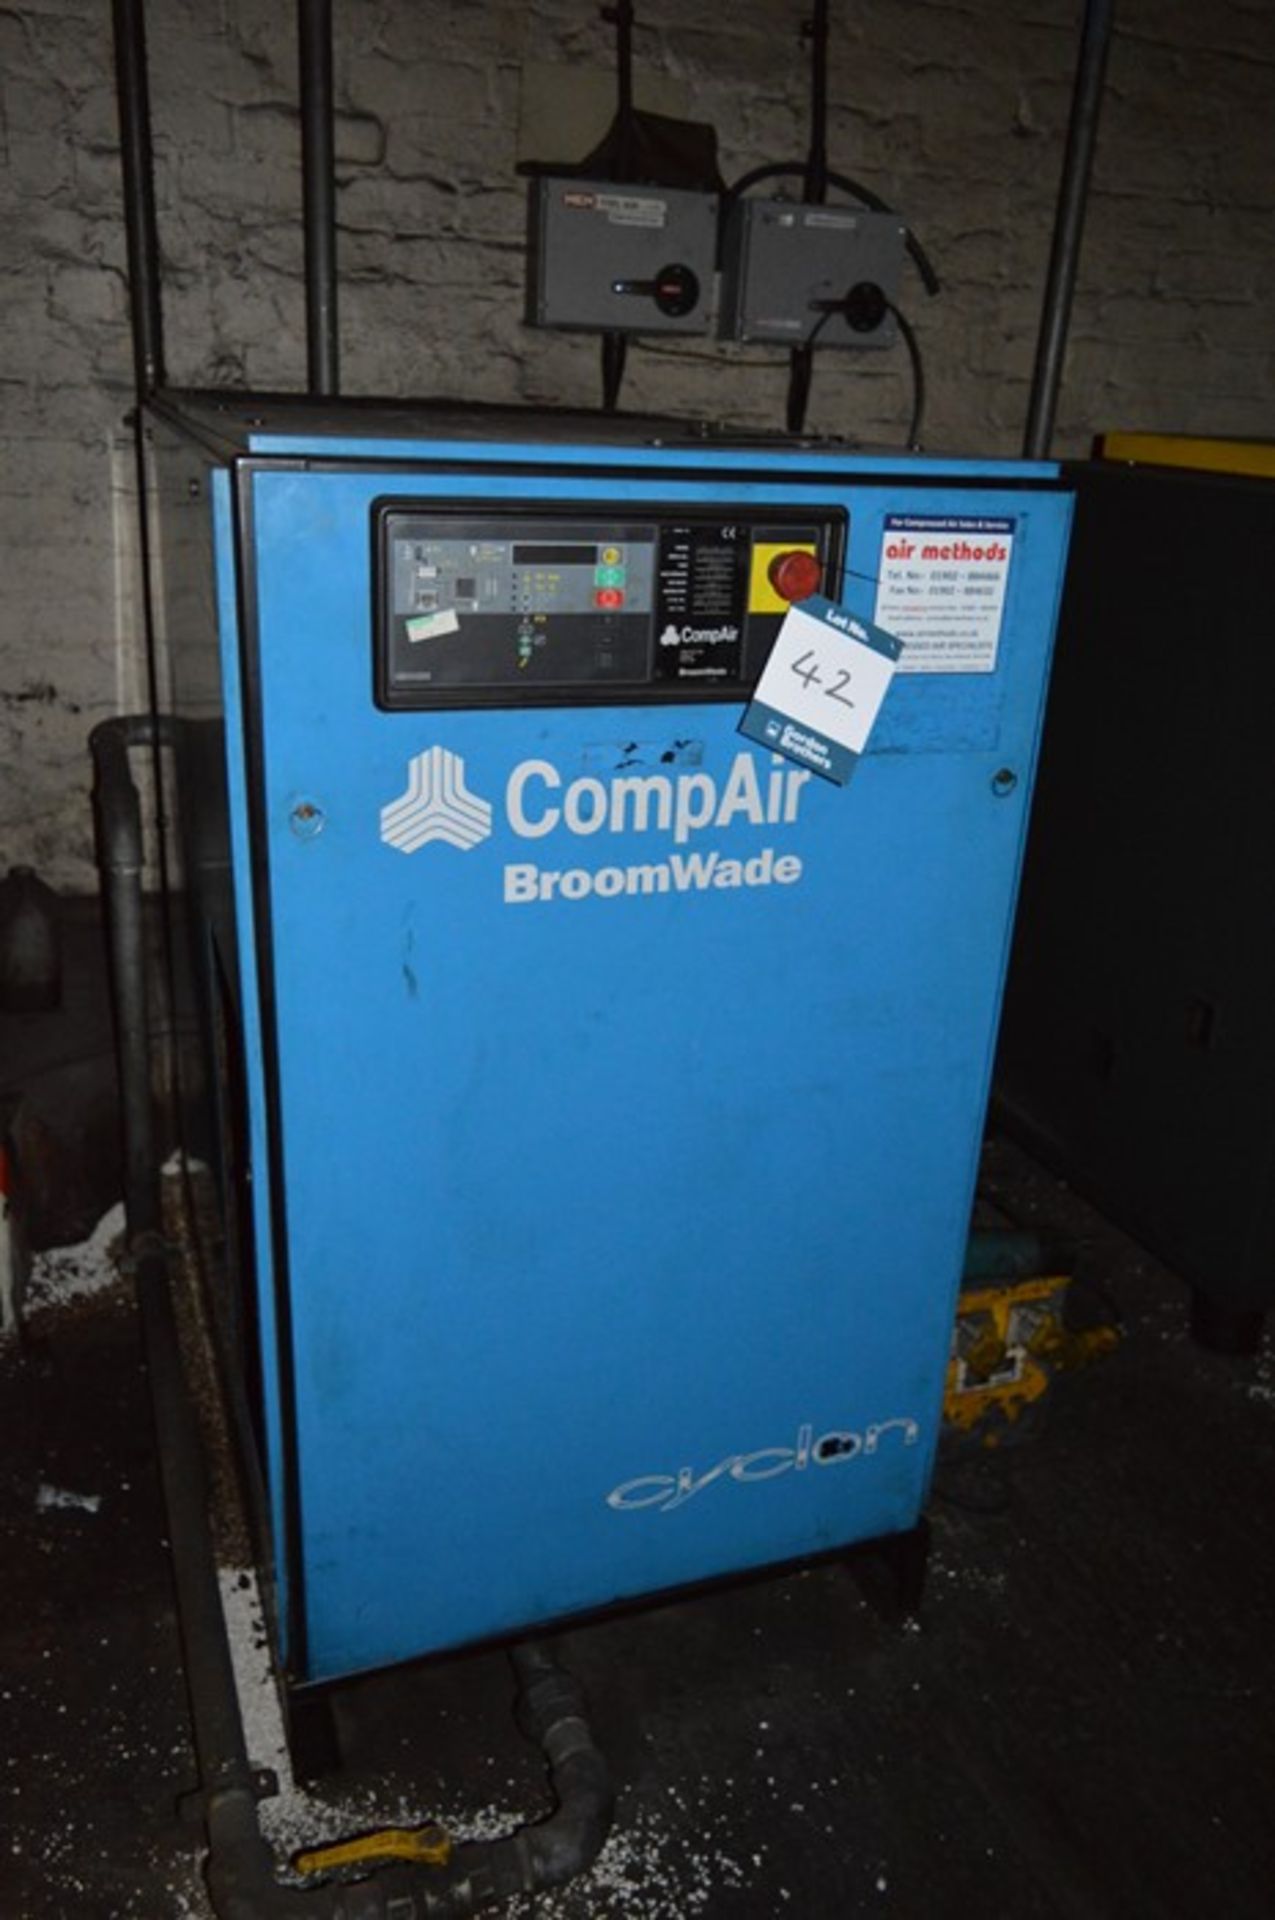 CompAir Broomwade, Model: Cyclon 222, packaged air compressor, Serial No. F165/1707 (1998) Capacity: